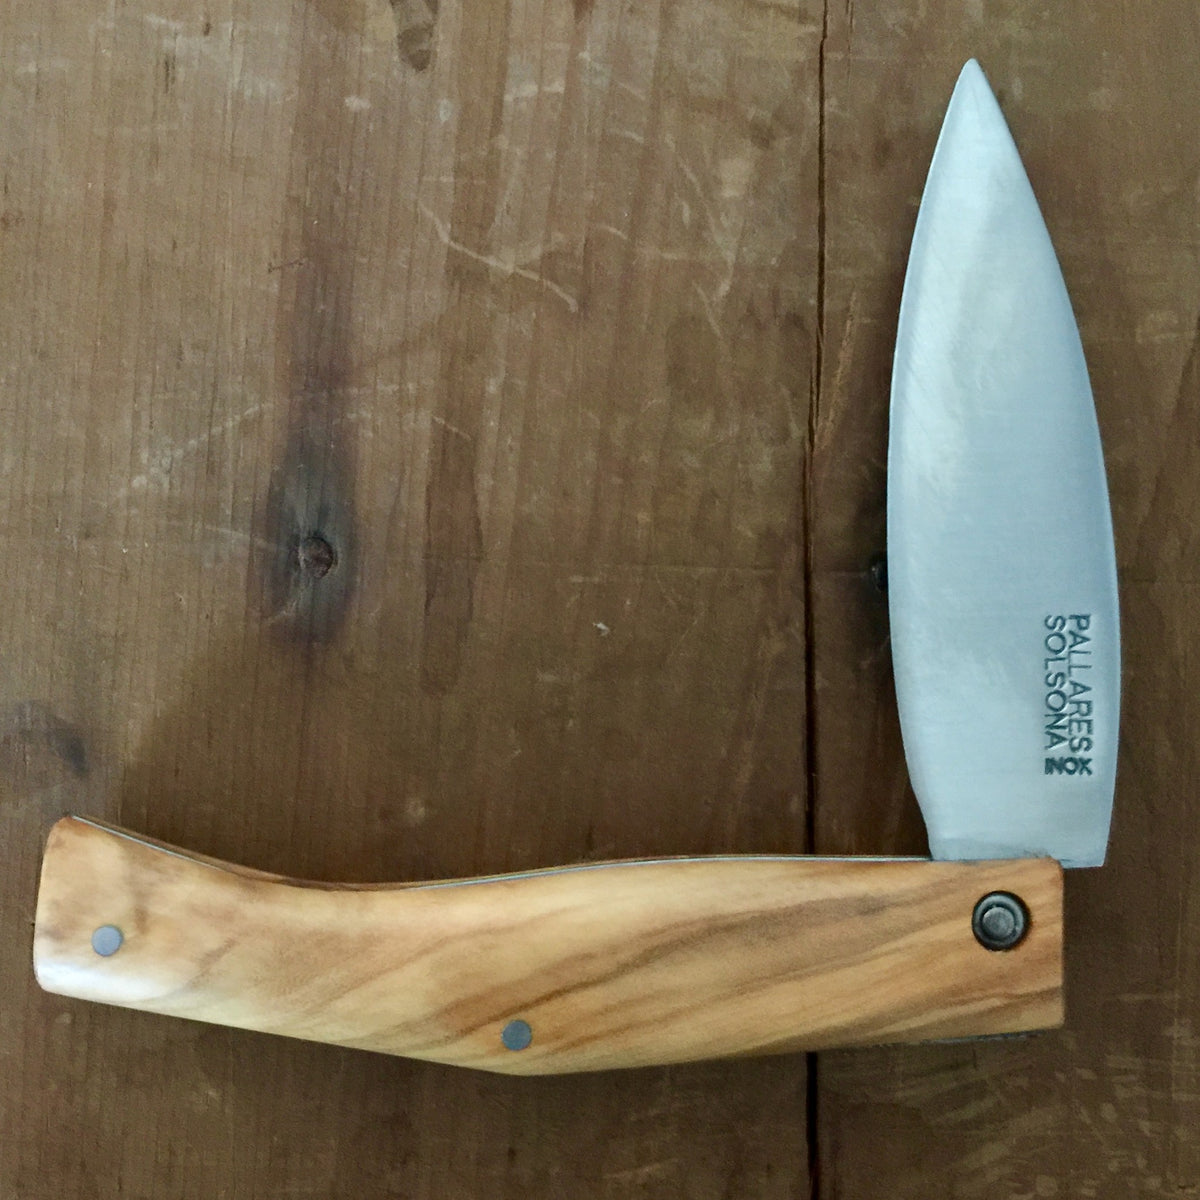 Set of Four Steak Knives - Plain Edge Blade - Olive Wood Handle | Due Buoi Spatula Store